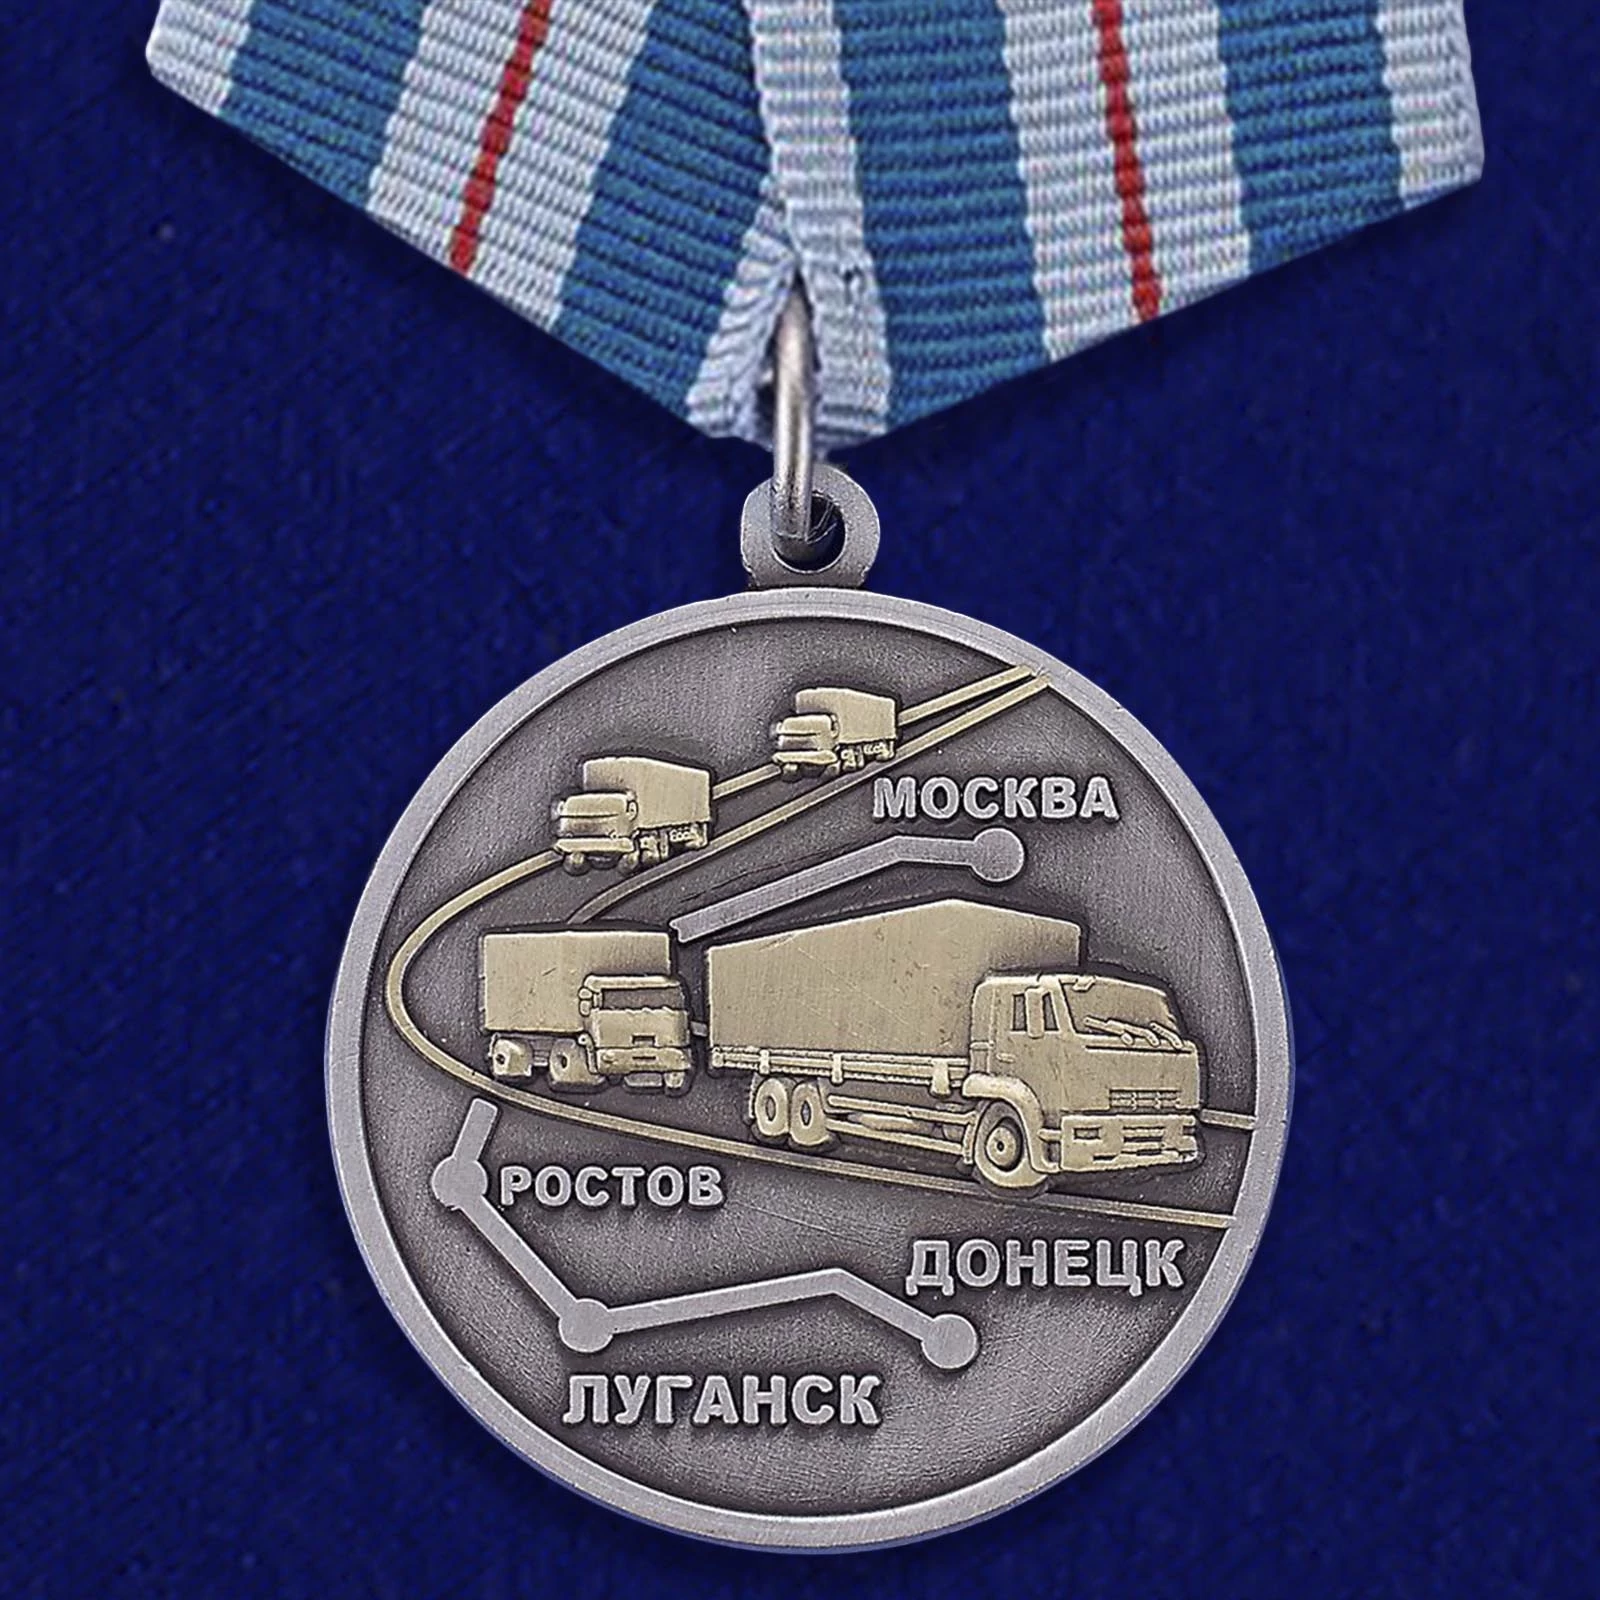 Медаль "Участнику гуманитарного конвоя" без футляра